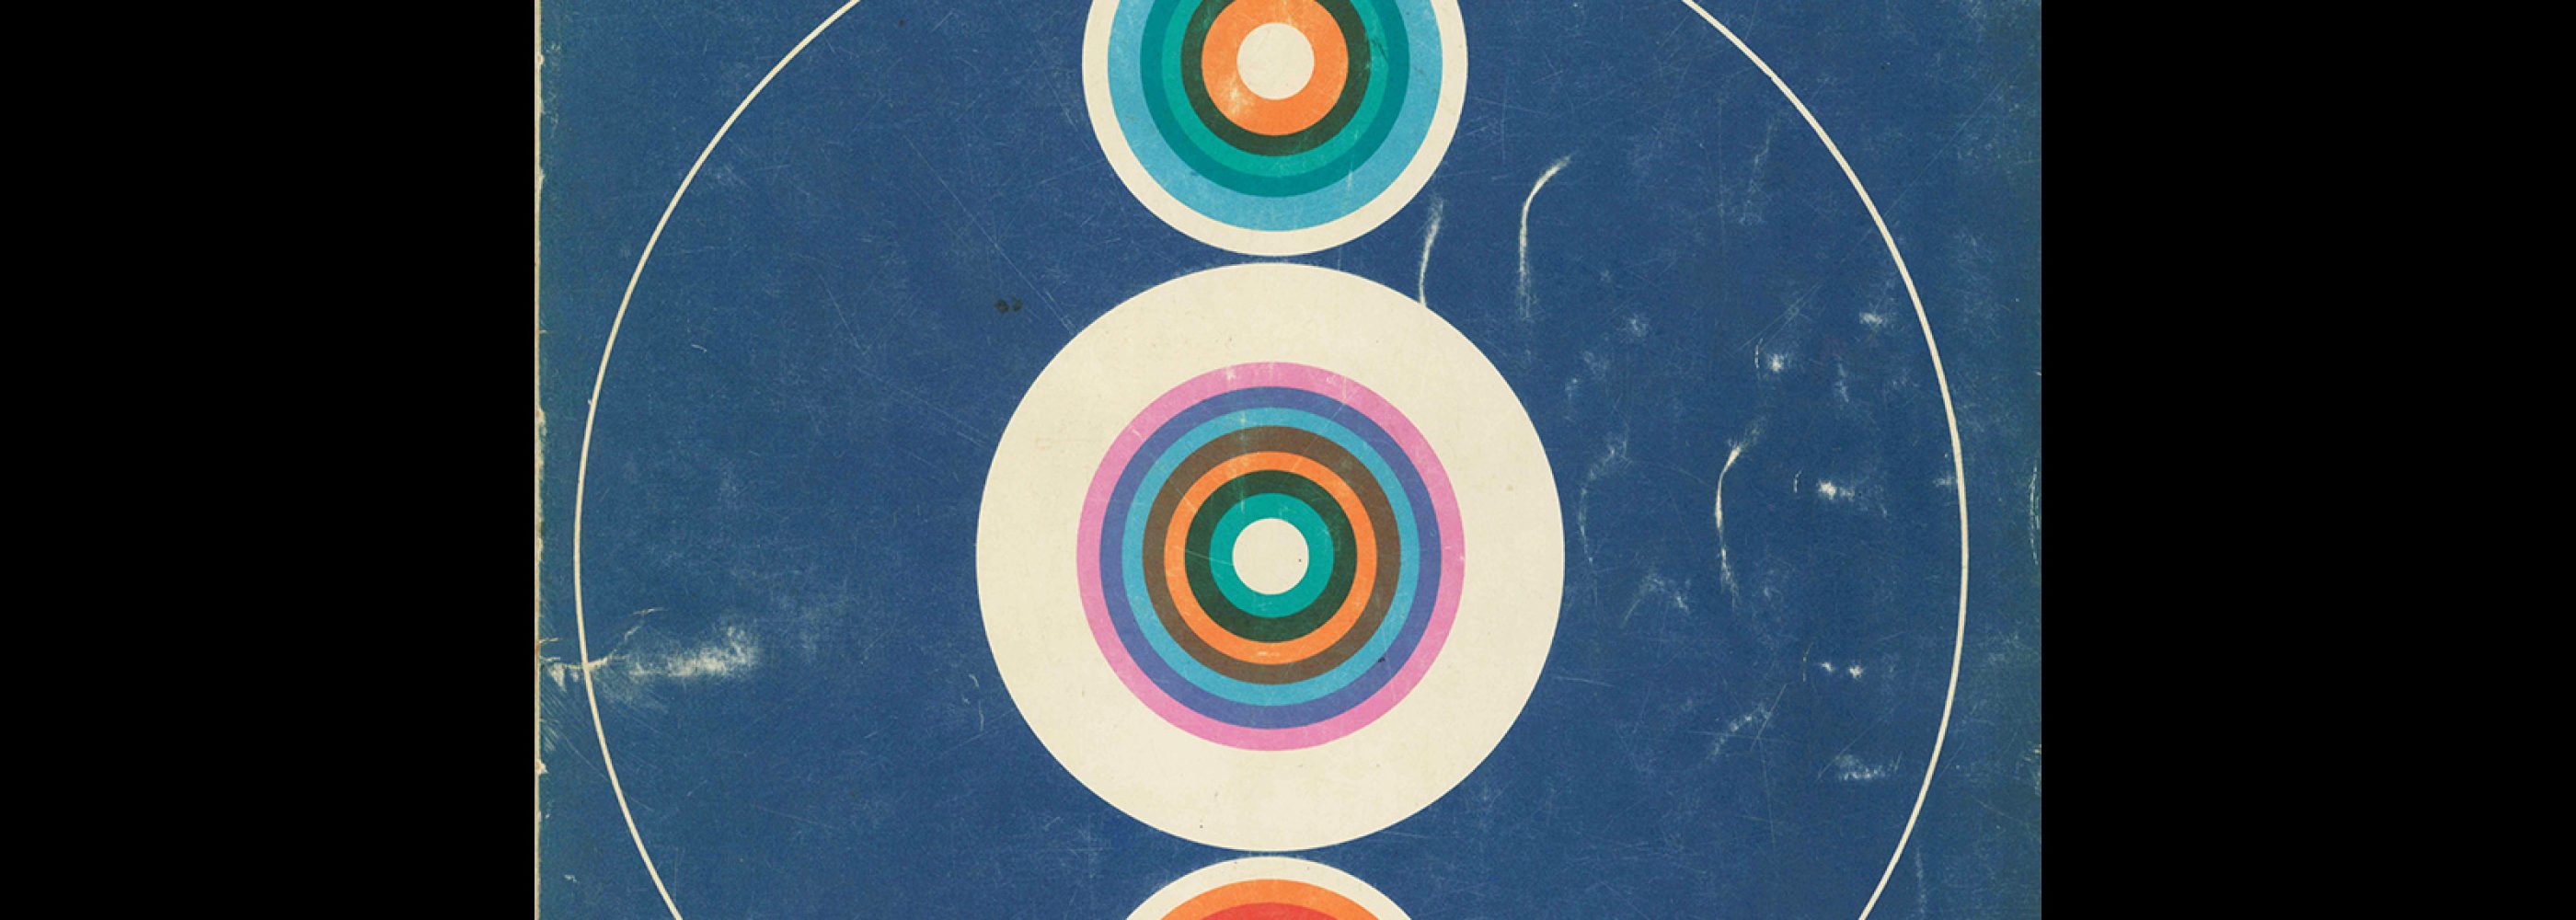 Idea October 1965 Extra issue - 15th Nisshinmi Exhibition Special Issue. Cover design by Yusaku Kamekura